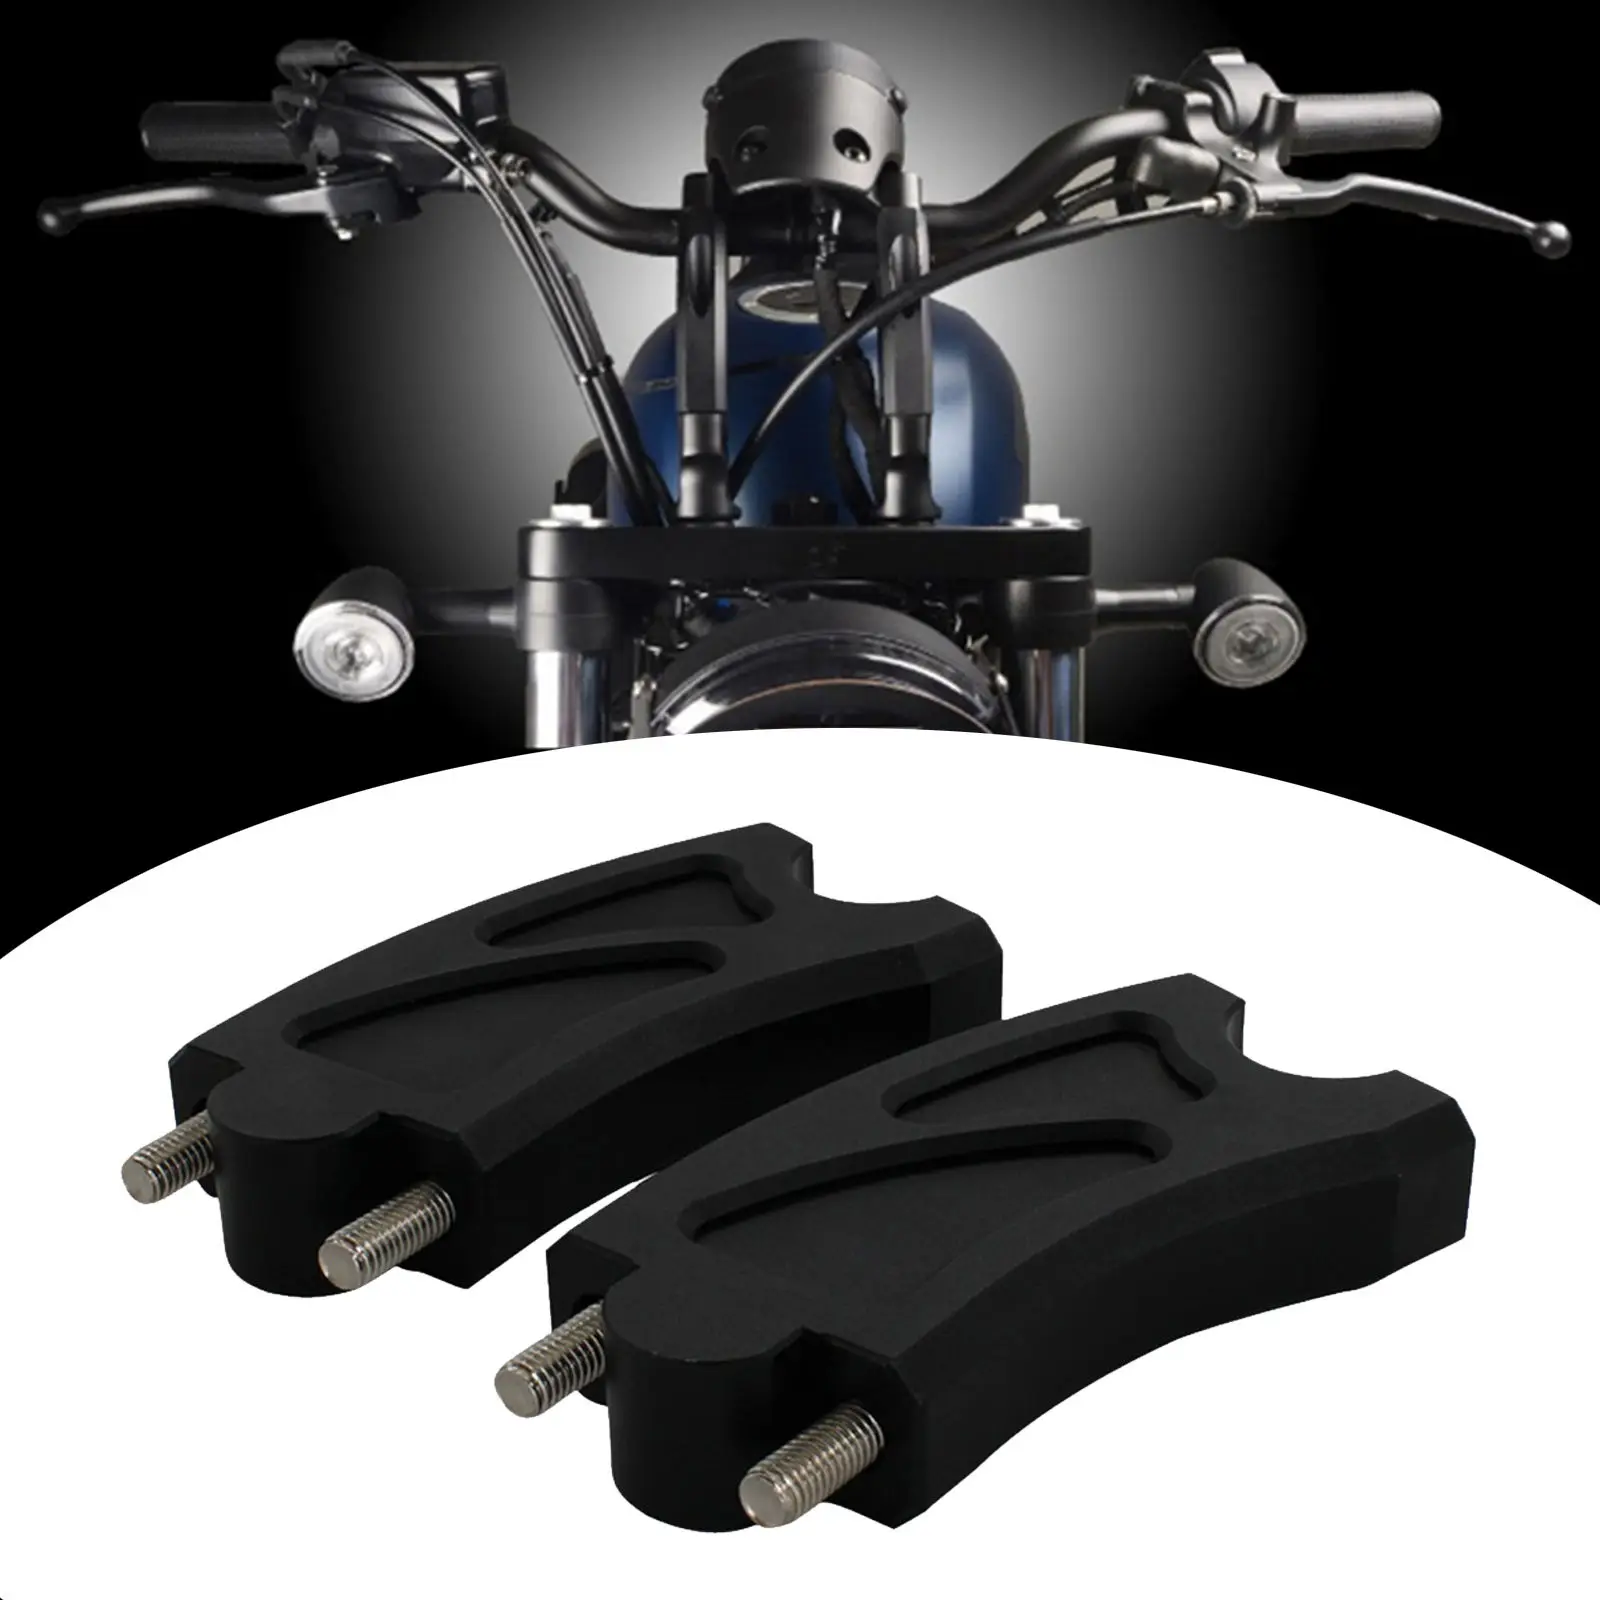 Universal Motorcycle Handlebar Riser Lift Clamp Adapter Accessory Kit for Honda Rebel CMX 500/300, CMX500, CMX300